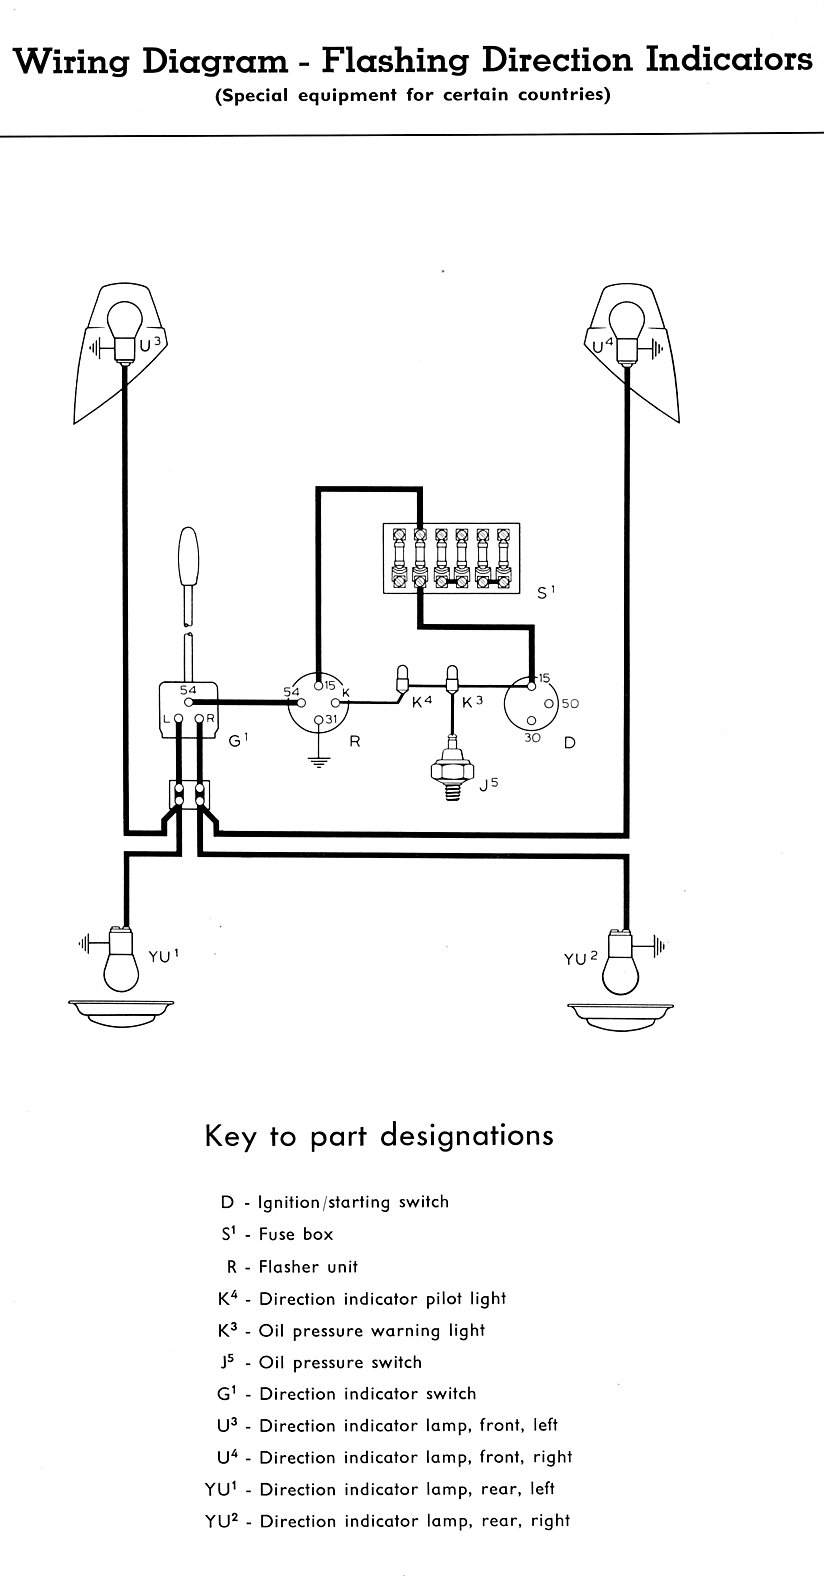 Simple Turn Signal Wiring Diagram from schematron.org